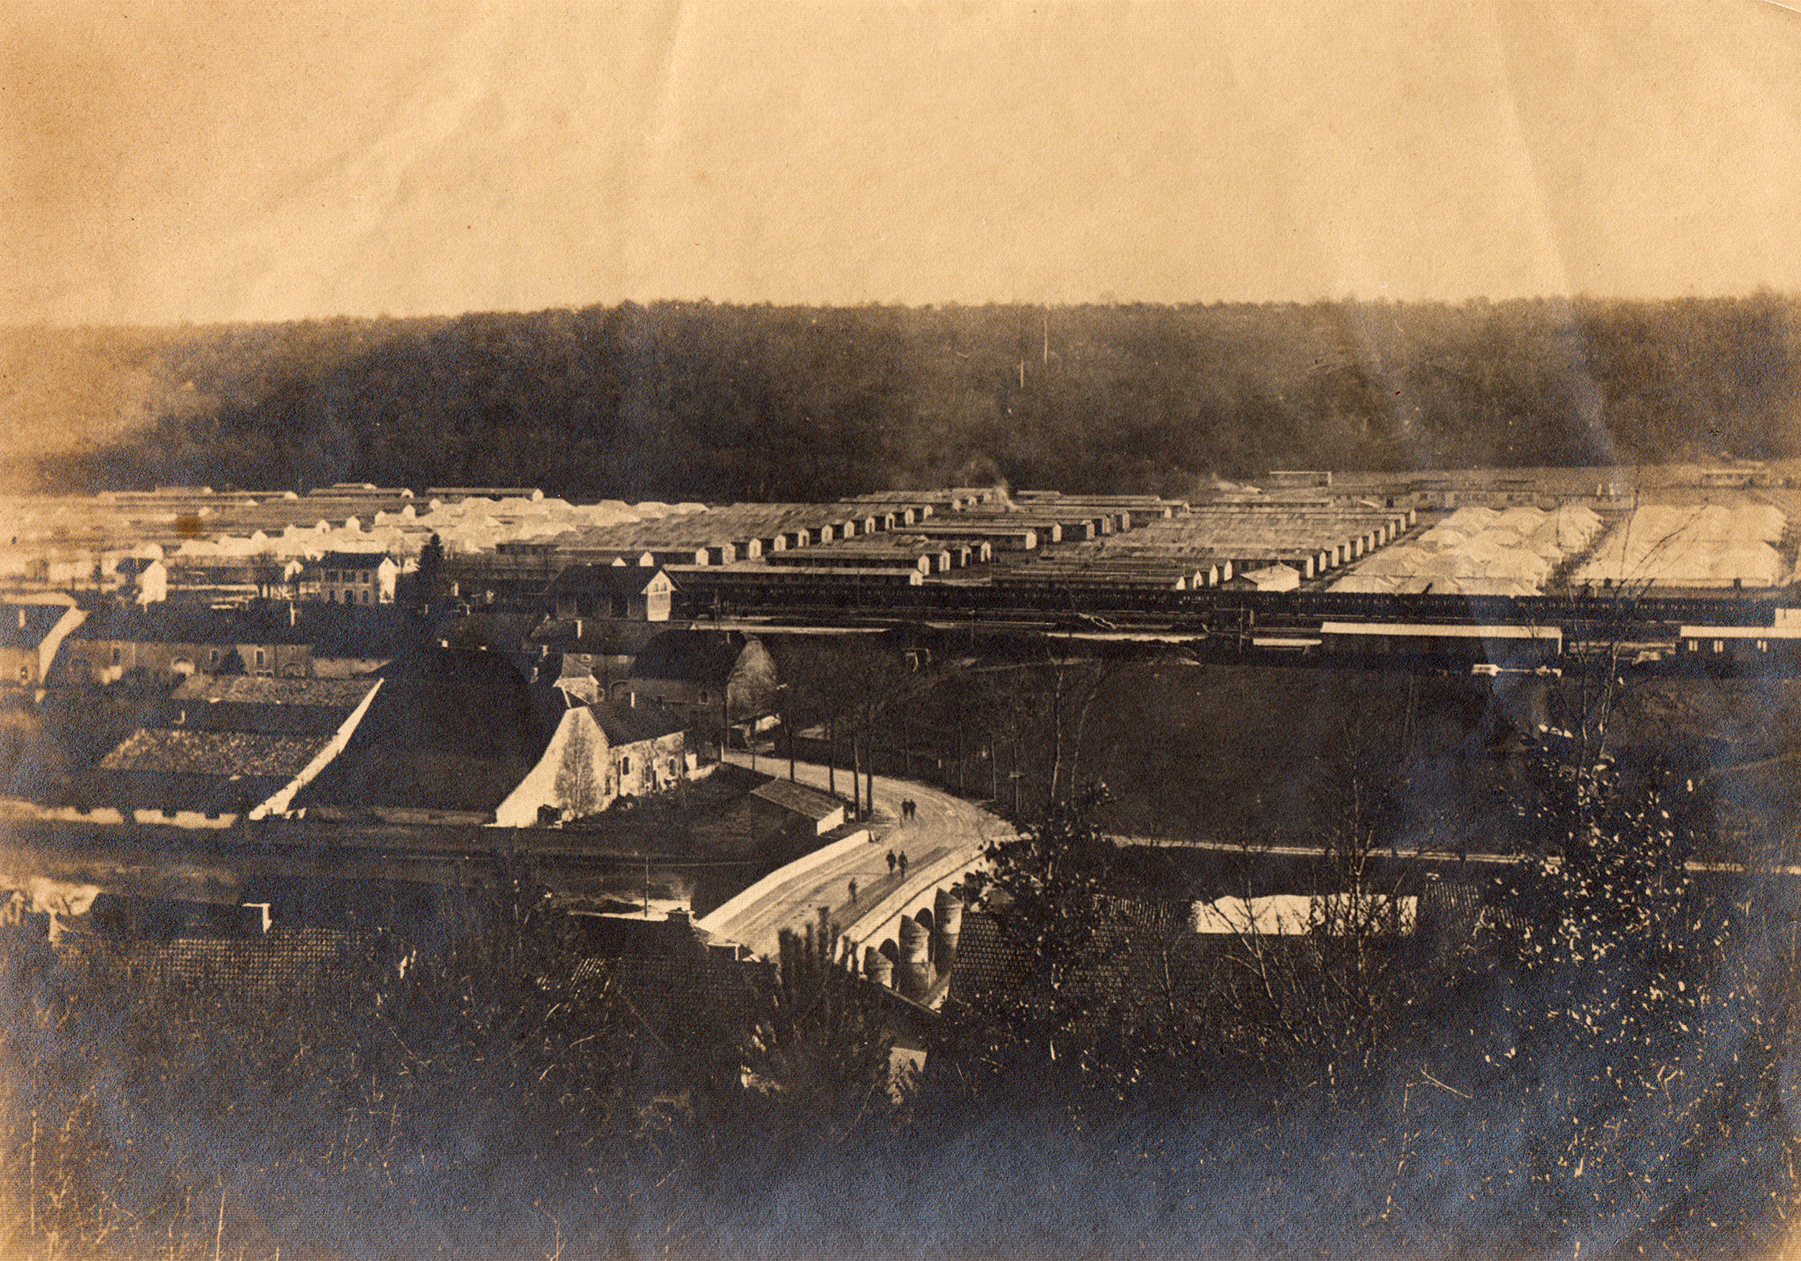 Bazoilles-sur-Meuse Hospital, Fall 1918